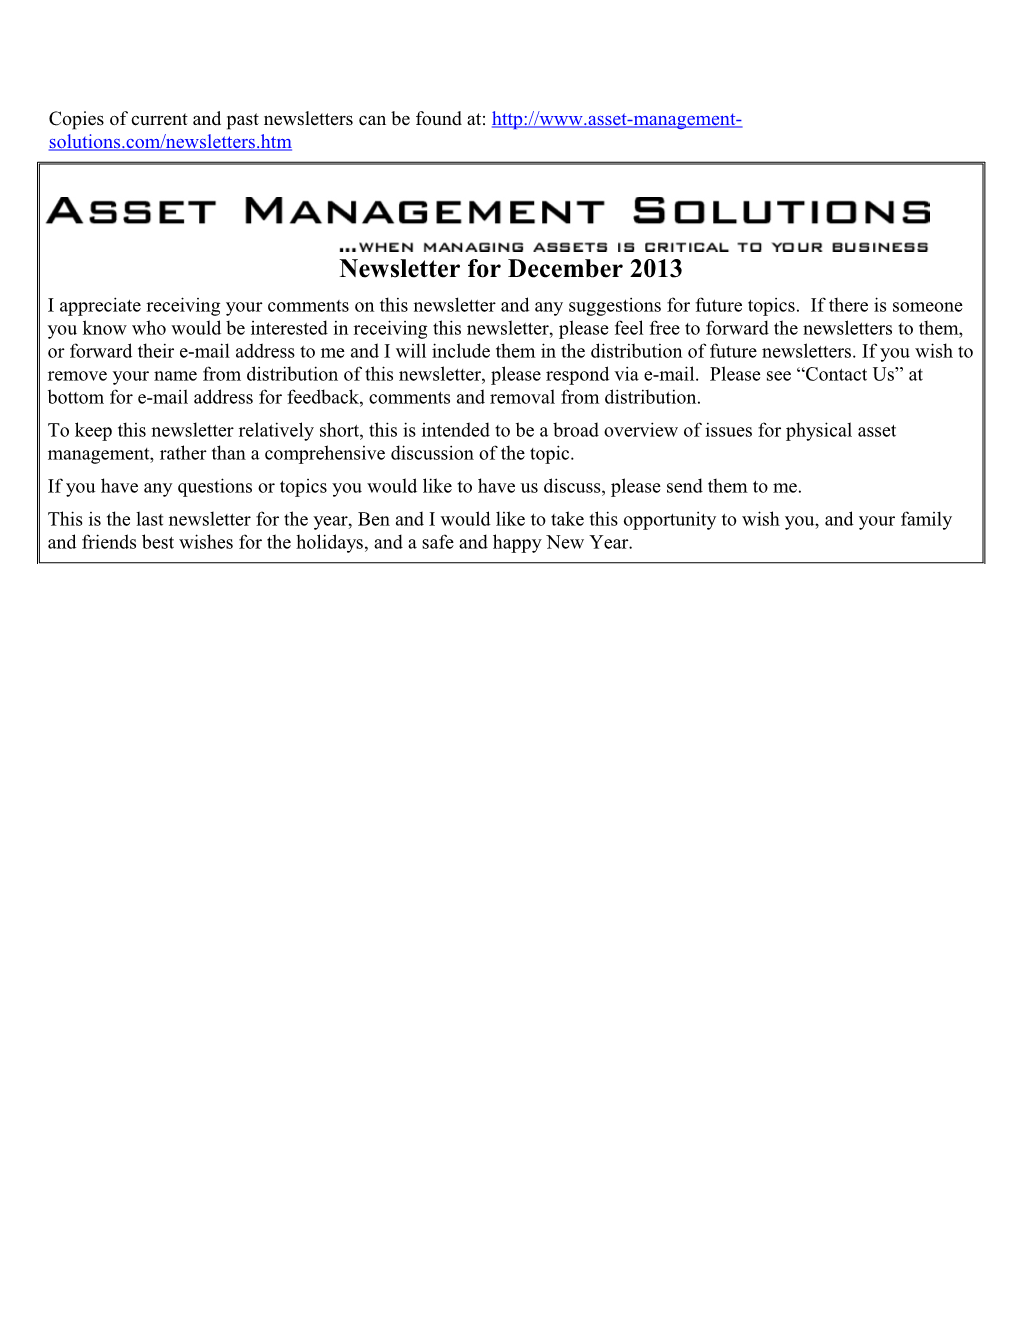 Asset Management Solutions Newsletter for December 2013